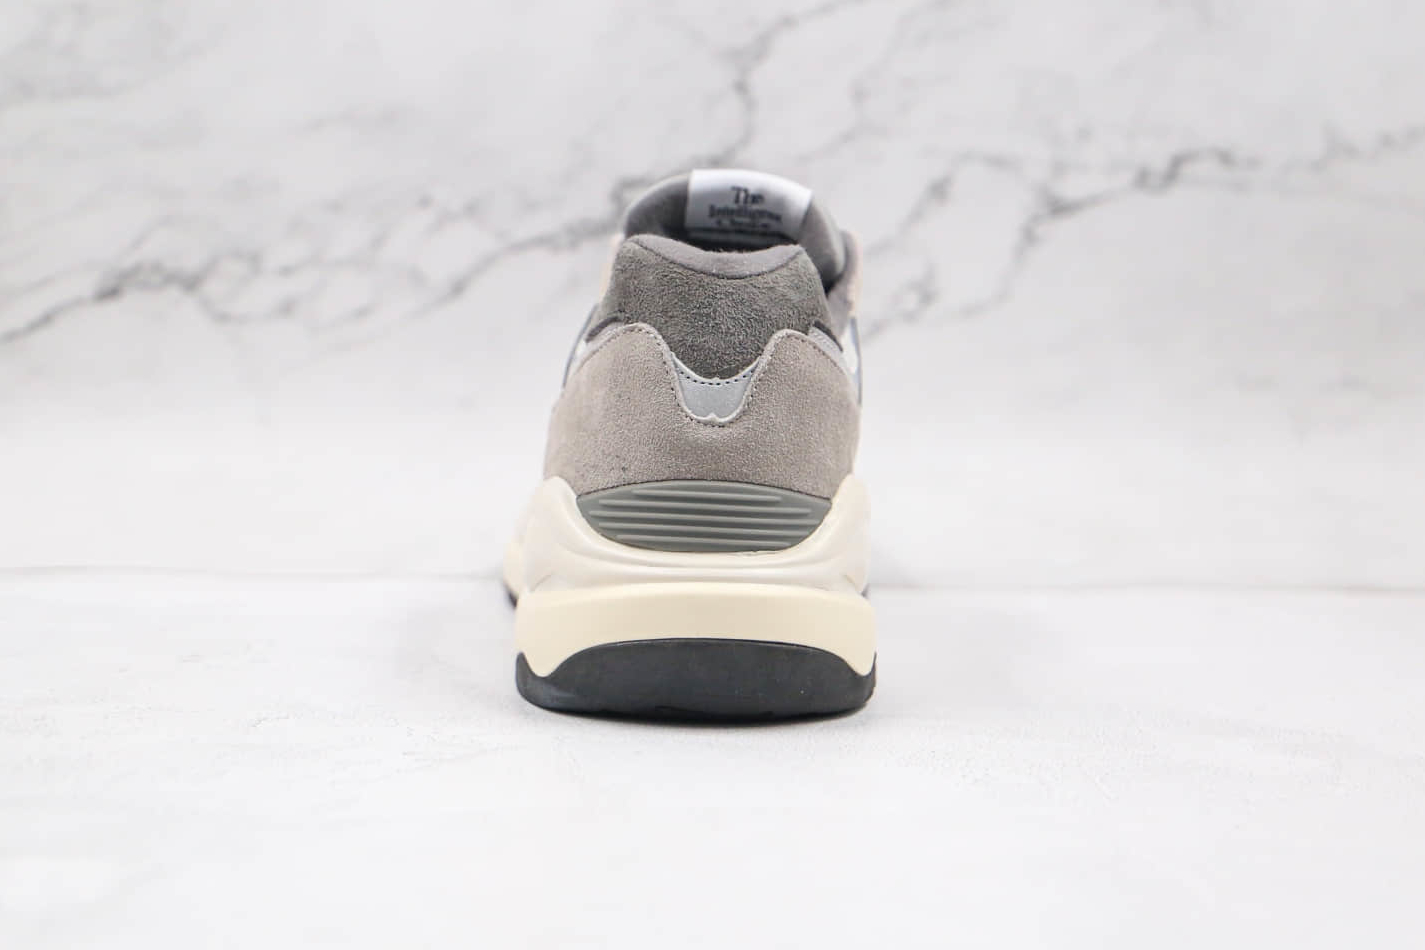 New Balance 57 40 'Grey Day' M5740TA - Stylish and Versatile Sneakers